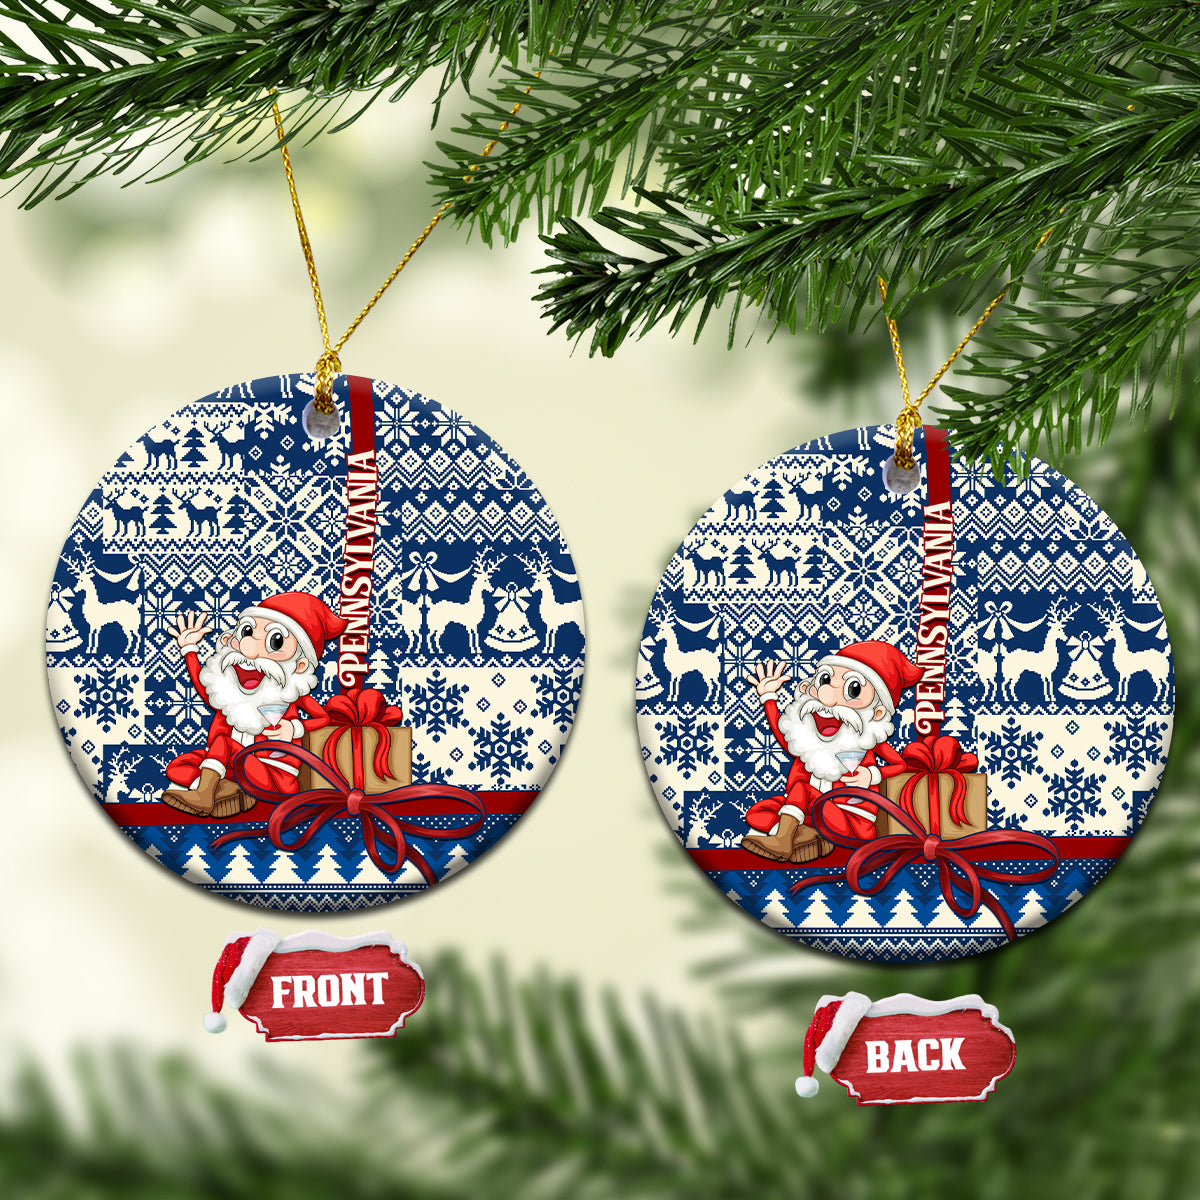 pennsylvania-christmas-ceramic-ornament-santa-claus-with-gift-box-xmas-pattern